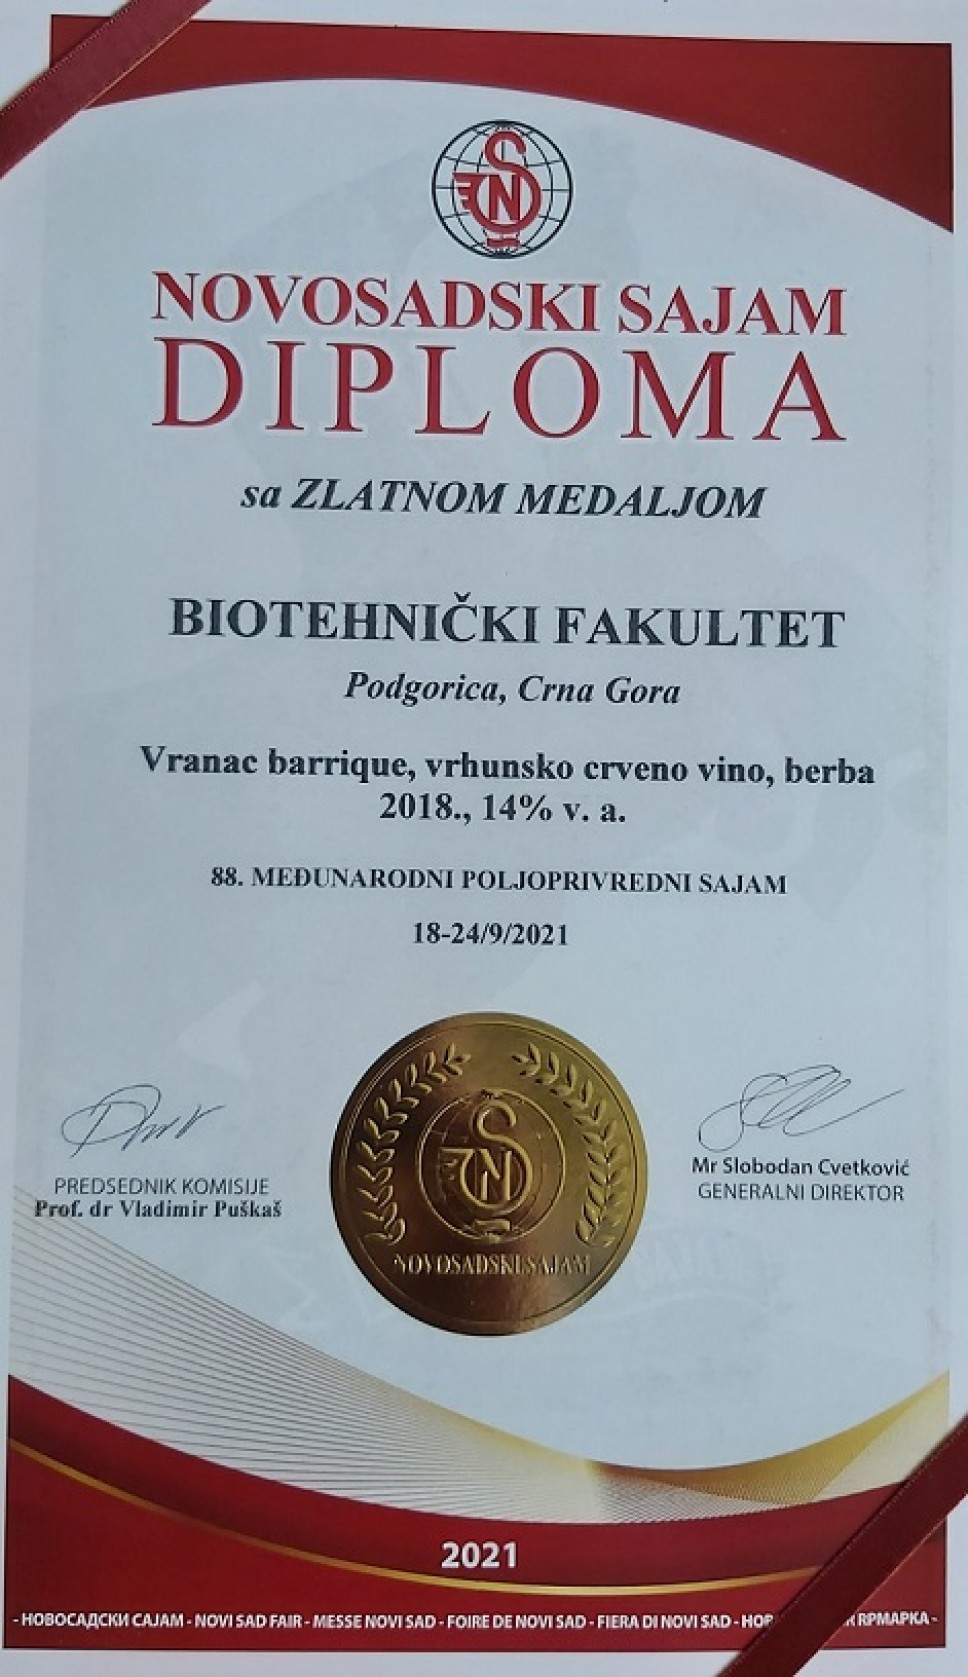 Dvije zlatne medalje za vina Biotehničkog fakulteta – potvrda vrhunskog kvaliteta